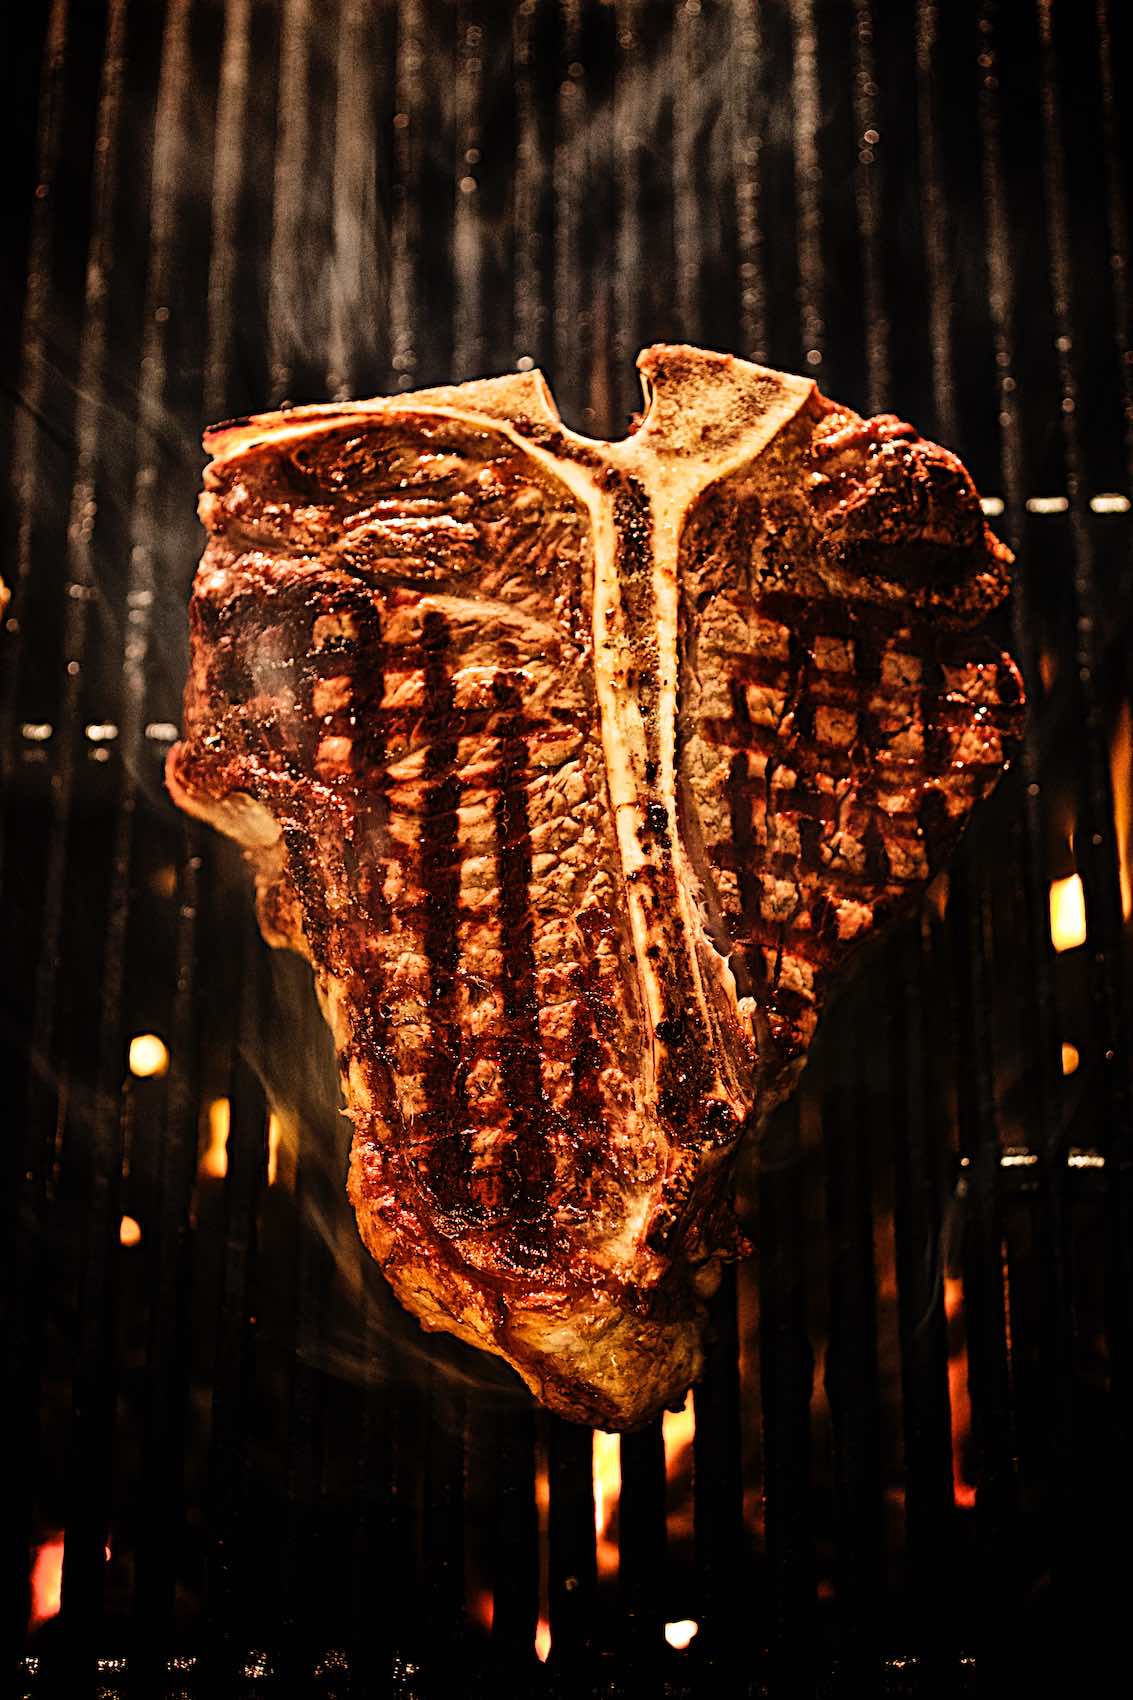 Jody Horton Photography - Grilling T-bone steak.